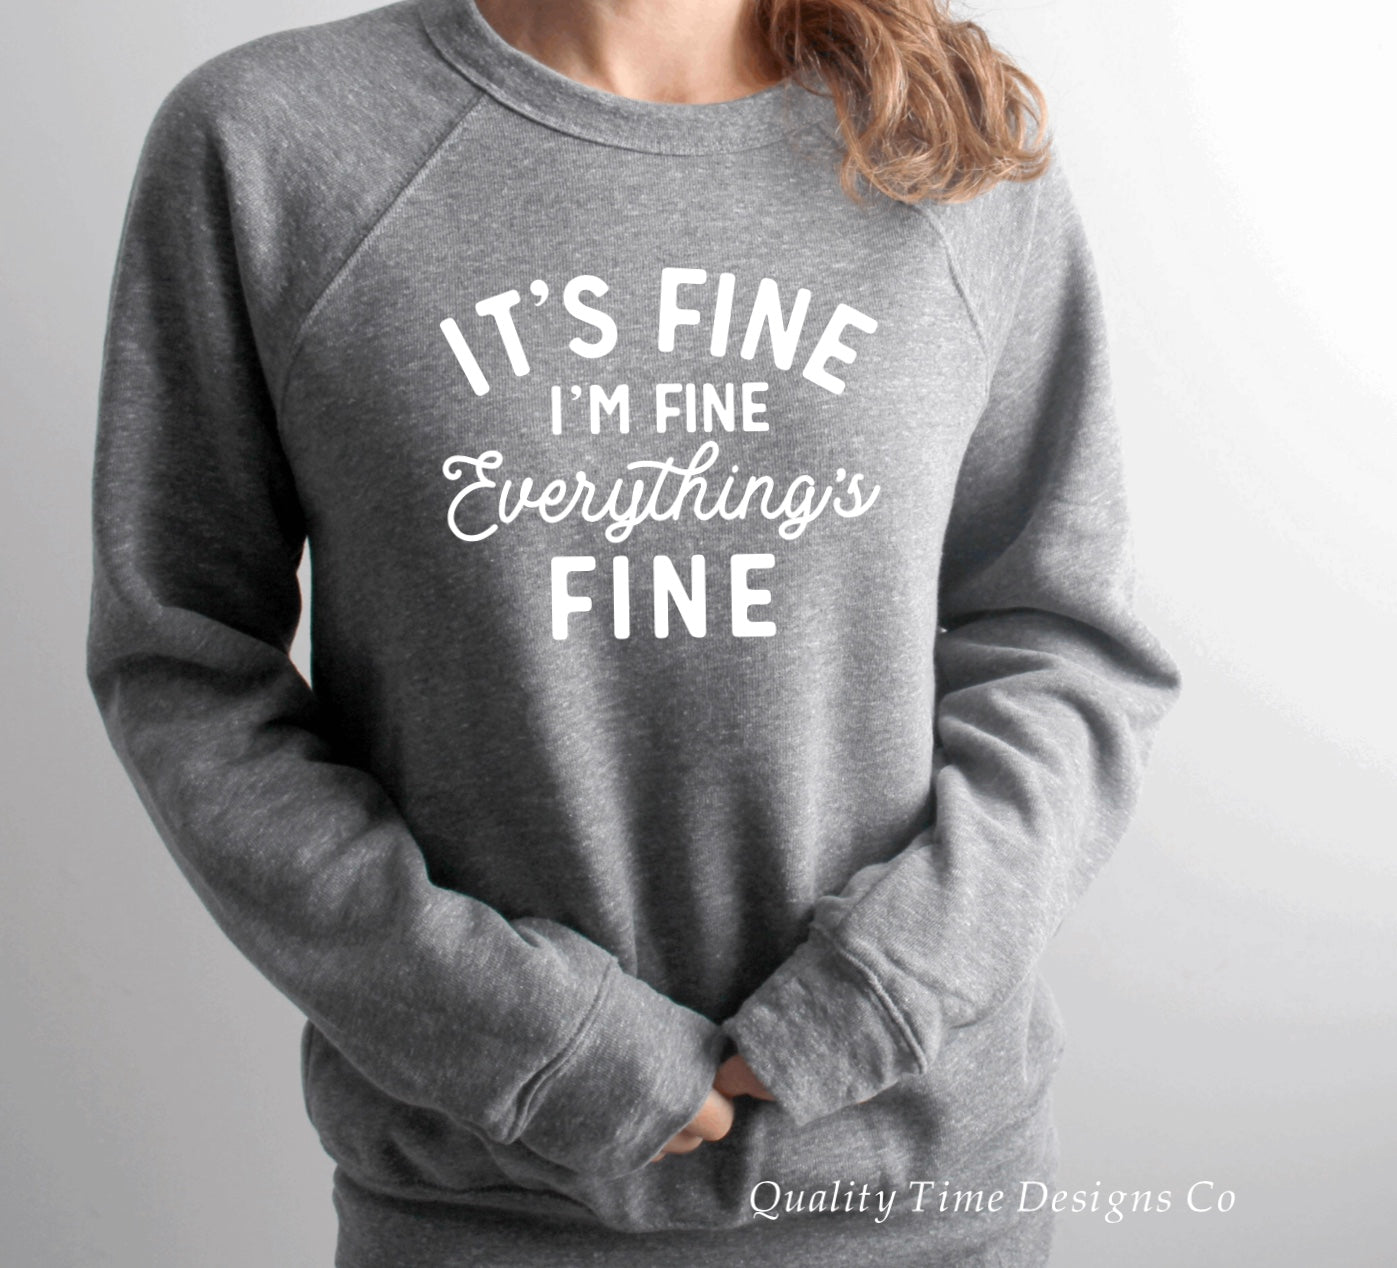 It’s fine I’m fine everything’s fine sweatshirt 